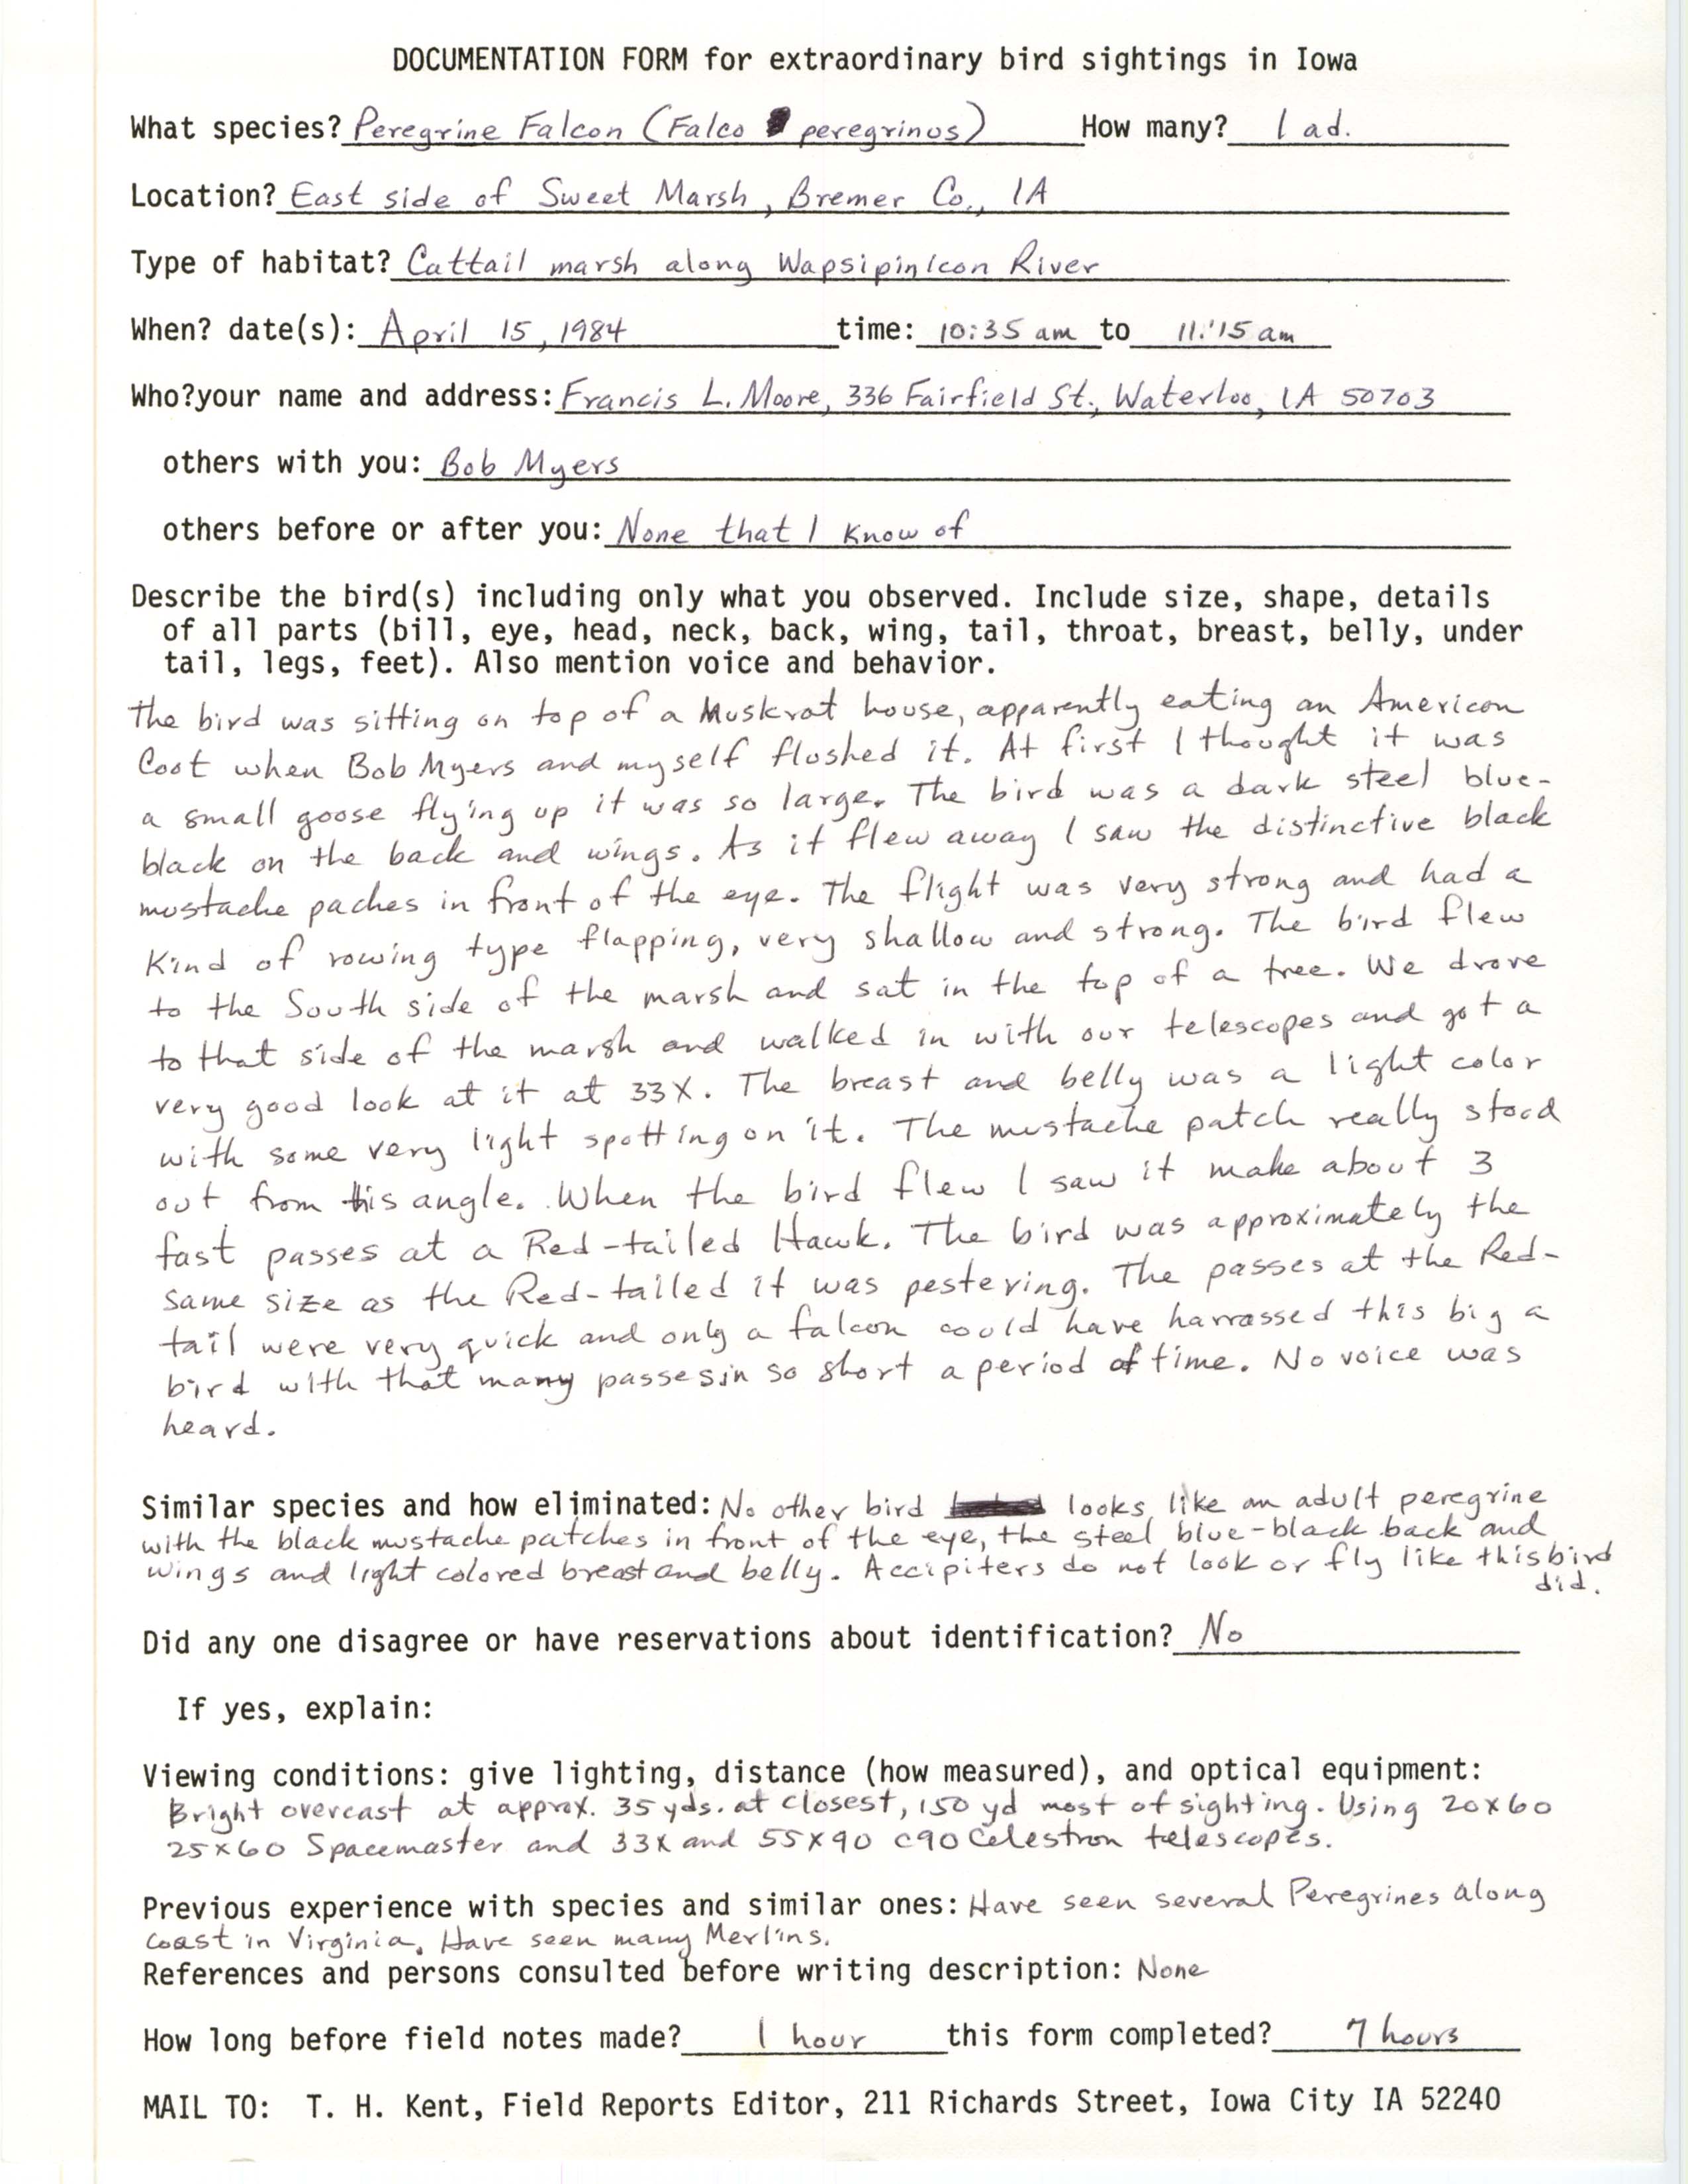 Rare bird documentation form for Peregrine Falcon at Sweet Marsh, 1984